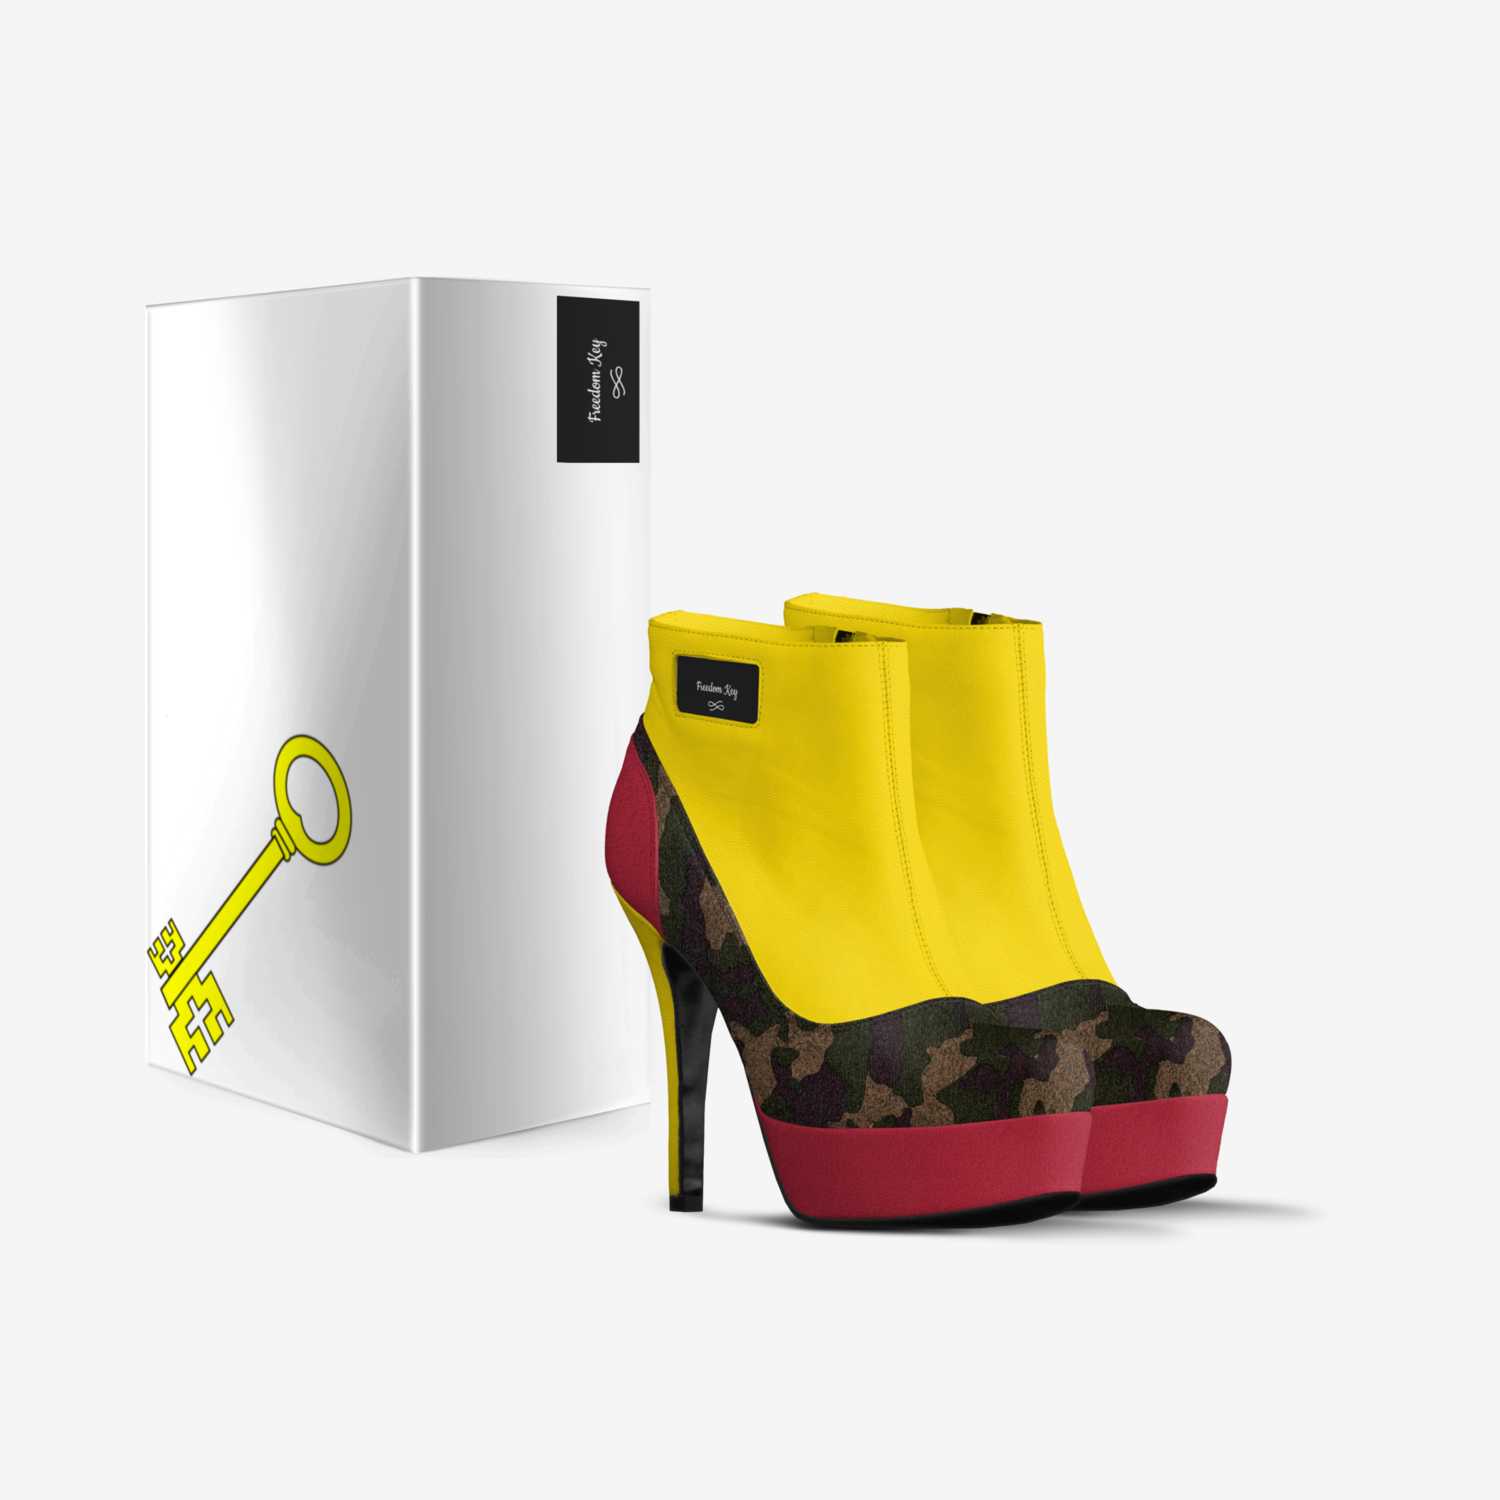 Freedom Key custom made in Italy shoes by Tawana Logan | Box view